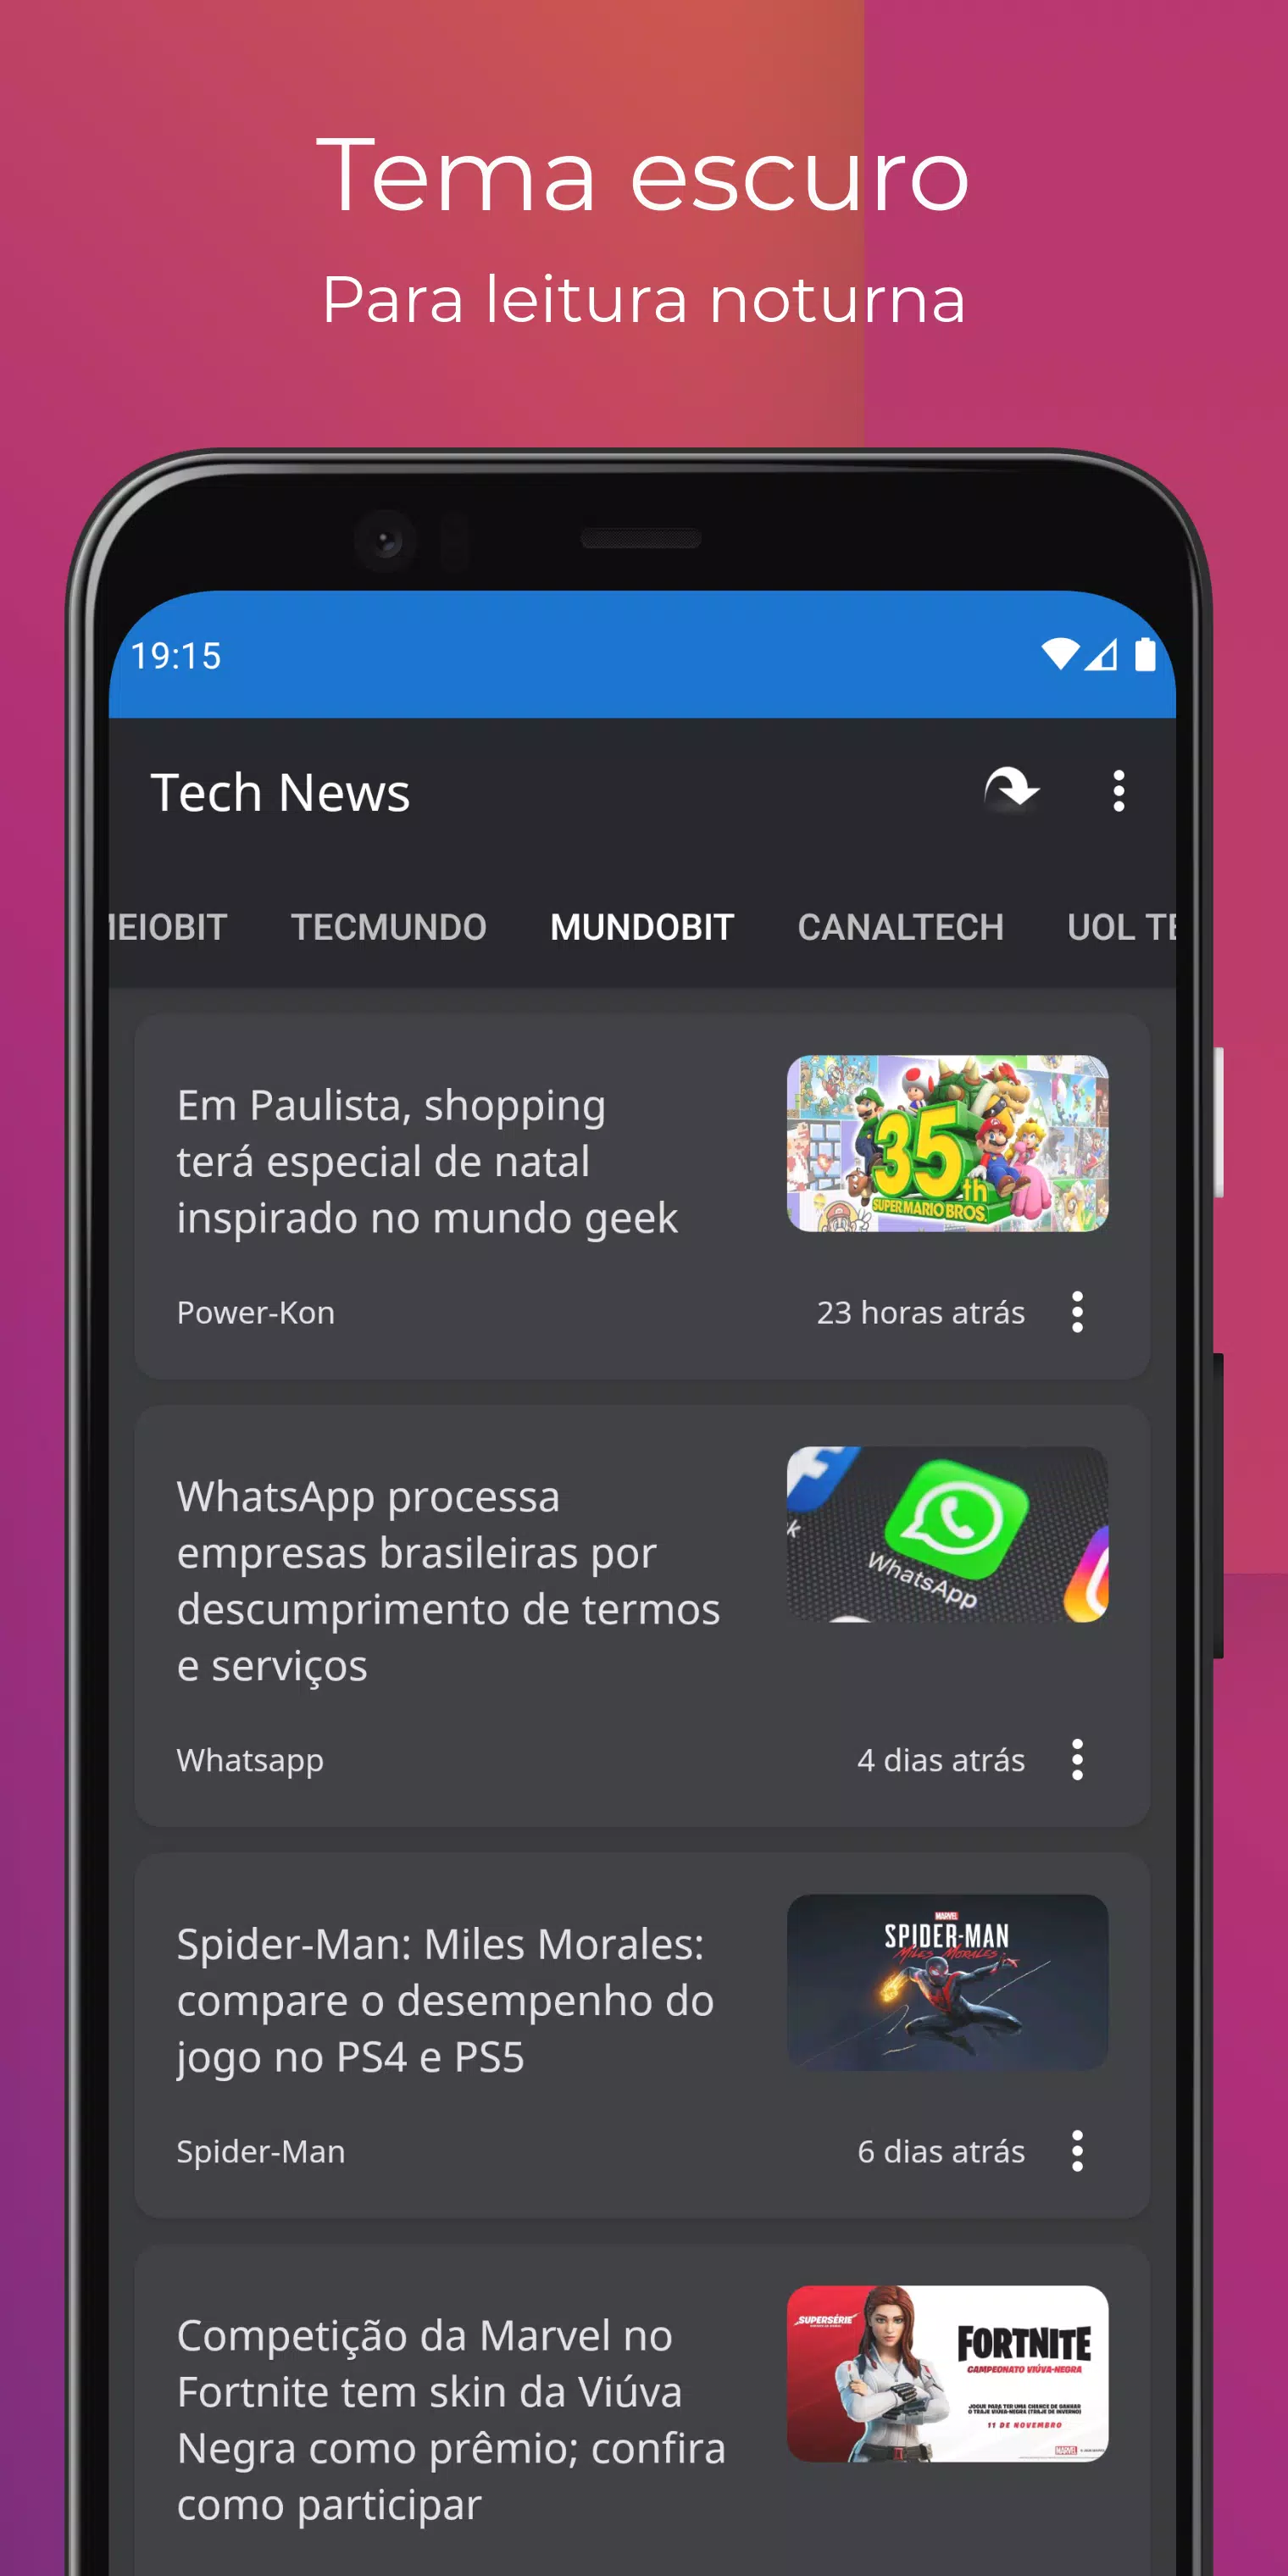 TecMundo Notícias - APK Download for Android